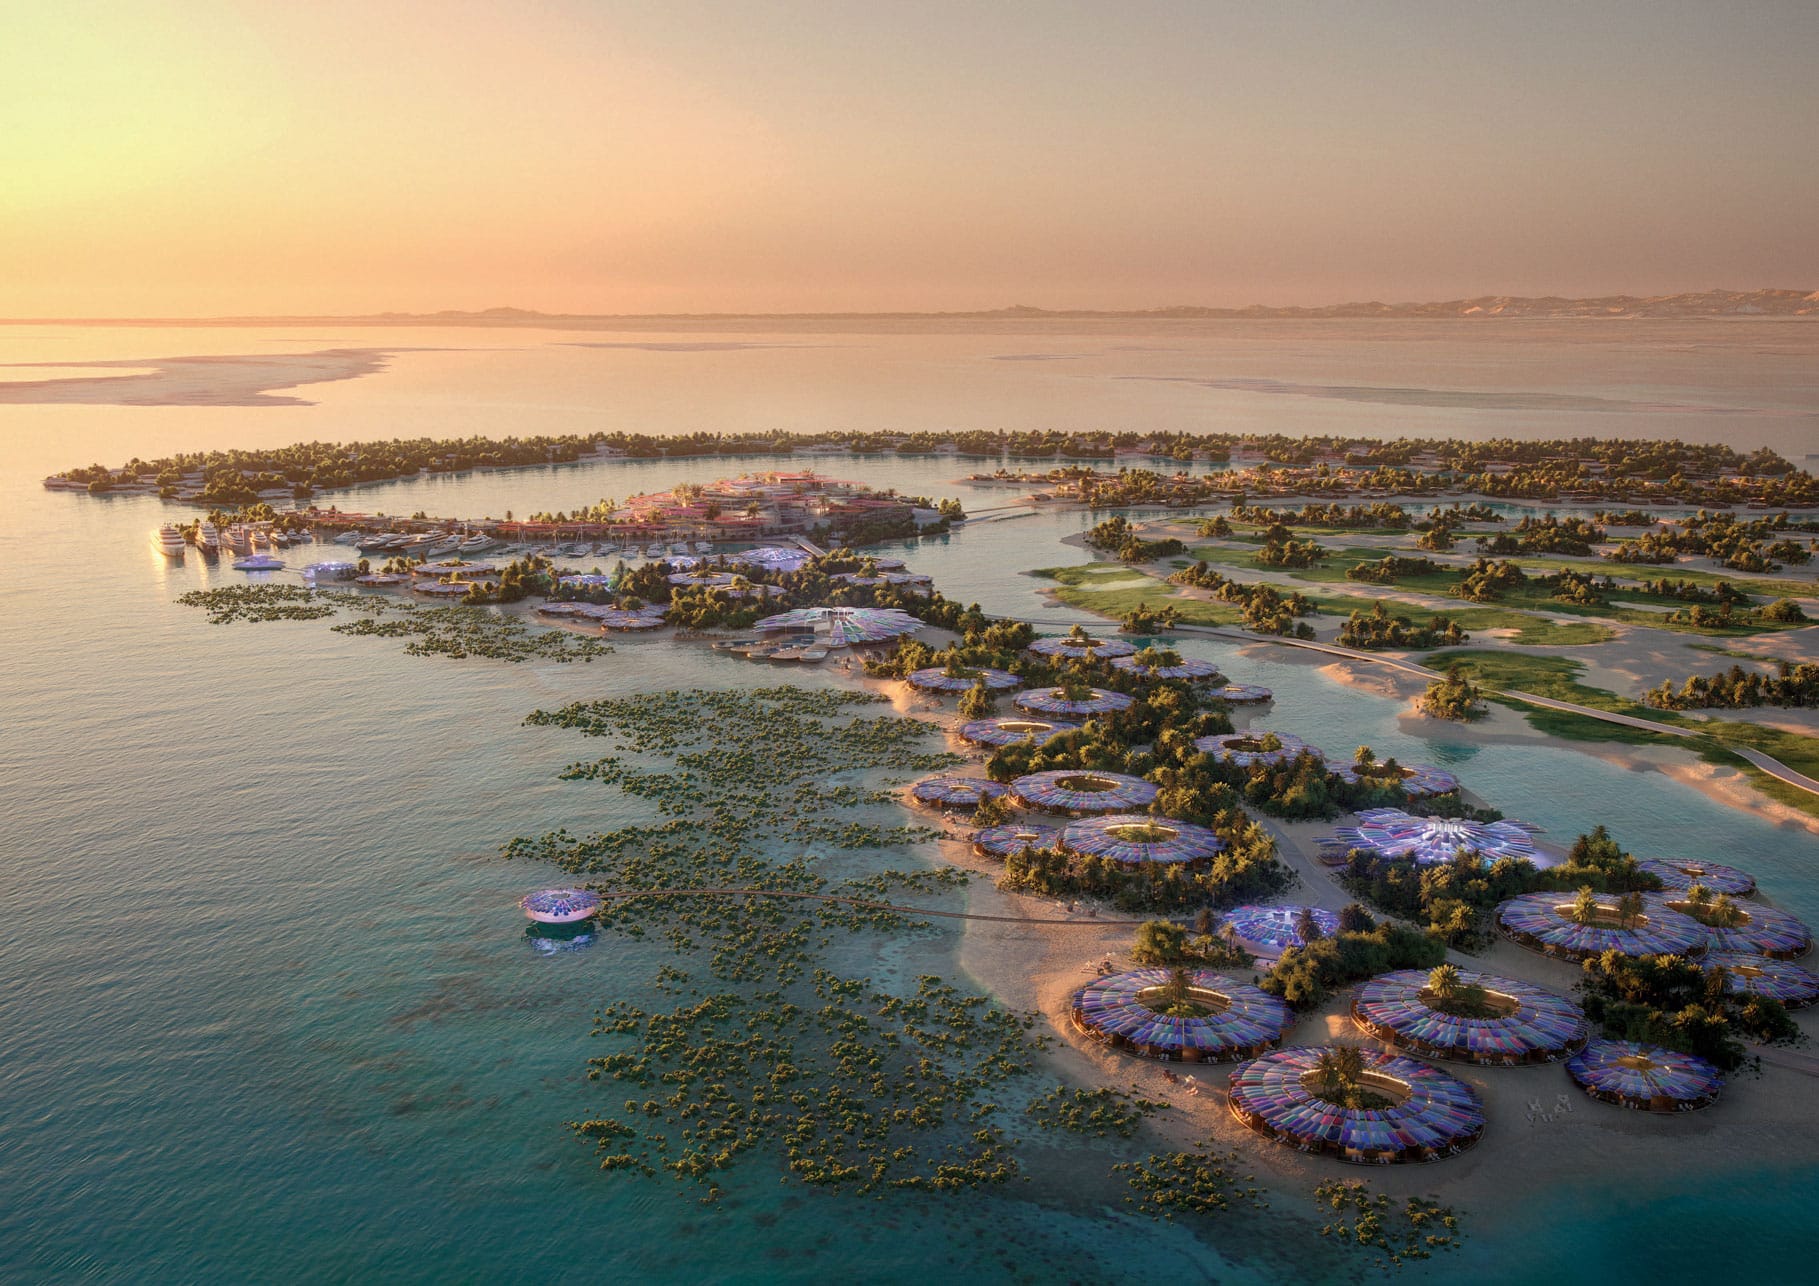 red sea tourism project saudi arabia